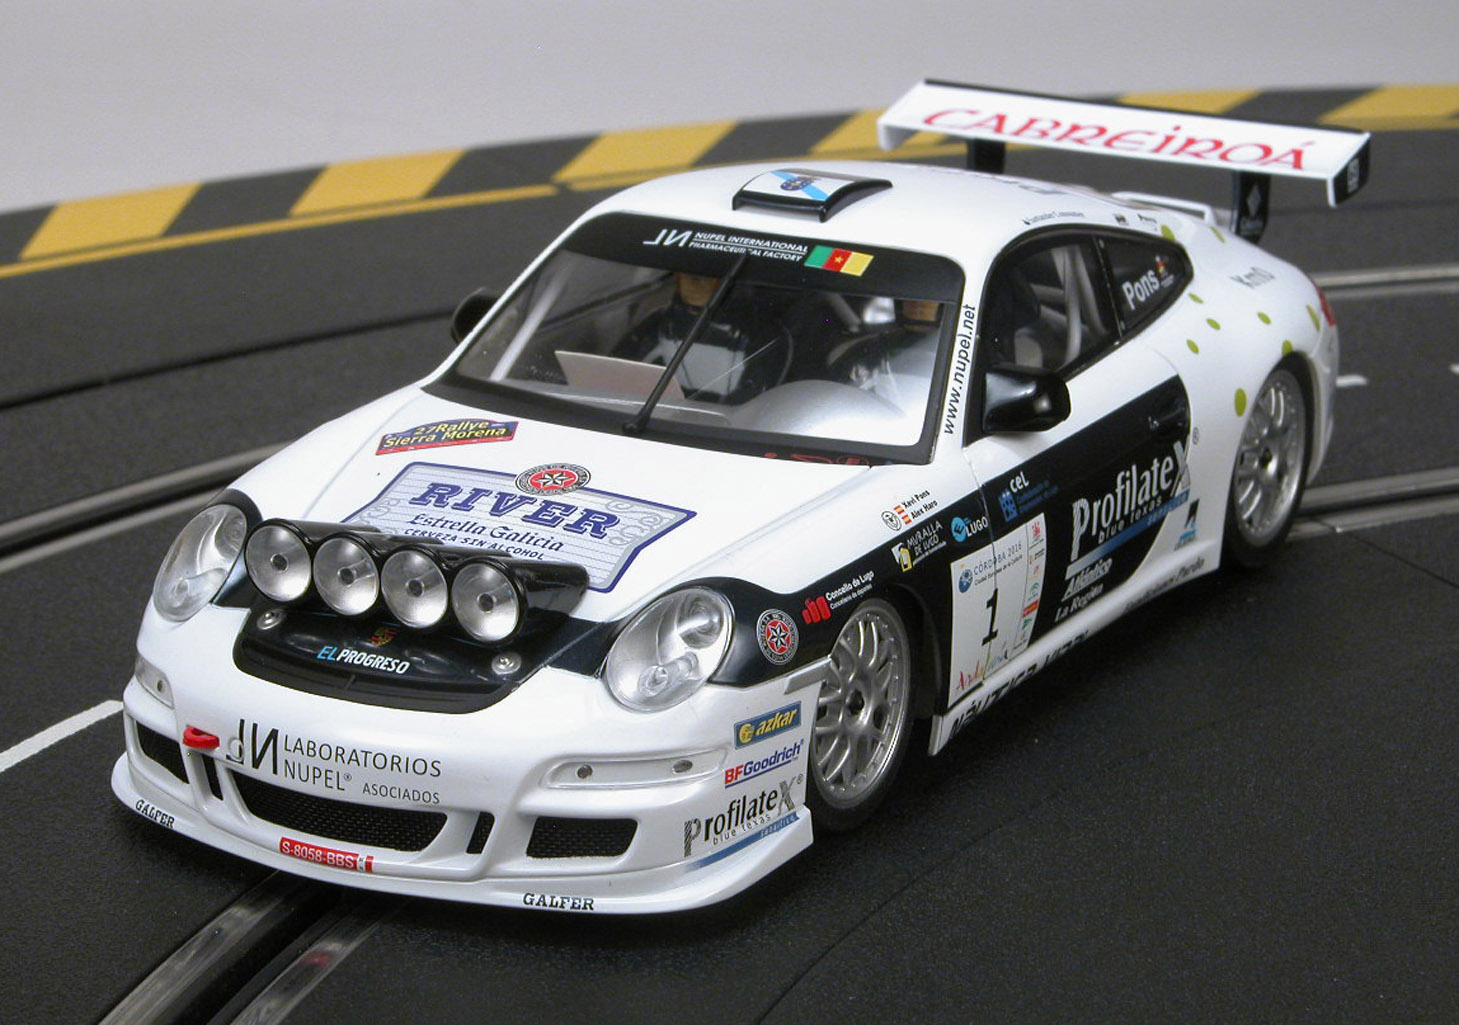 SC-7006 Porsche 911 GT3 Rally Nupel Team 2009.  Pons